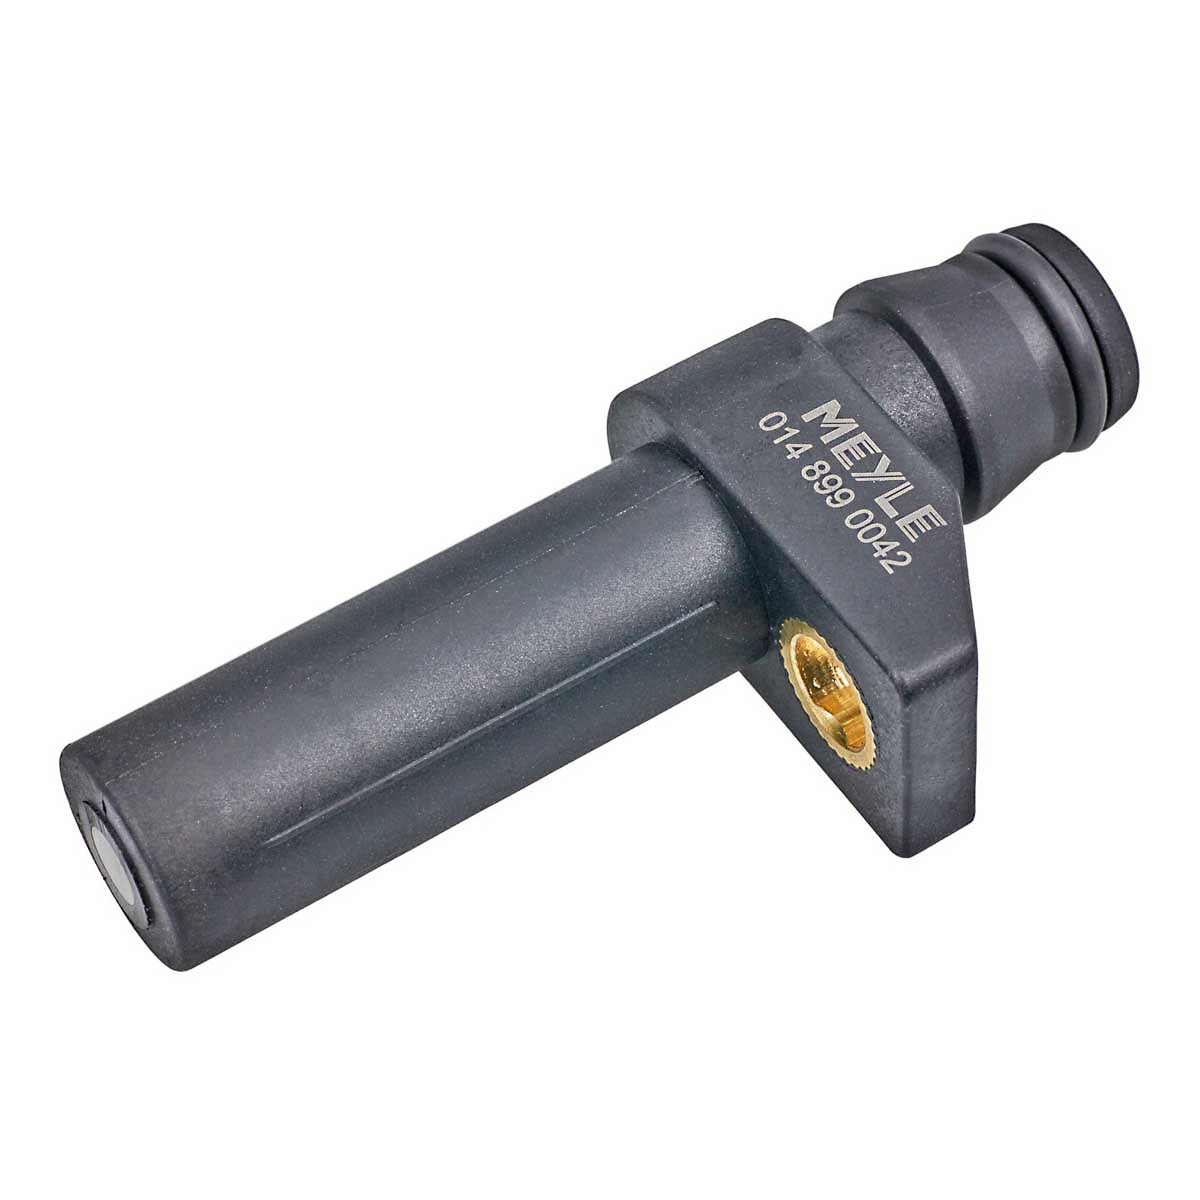 014 899 0042 MEYLE Crankshaft position sensor SUZUKI 2-pin connector, Inductive Sensor, with seal ring, without cable, ORIGINAL Quality